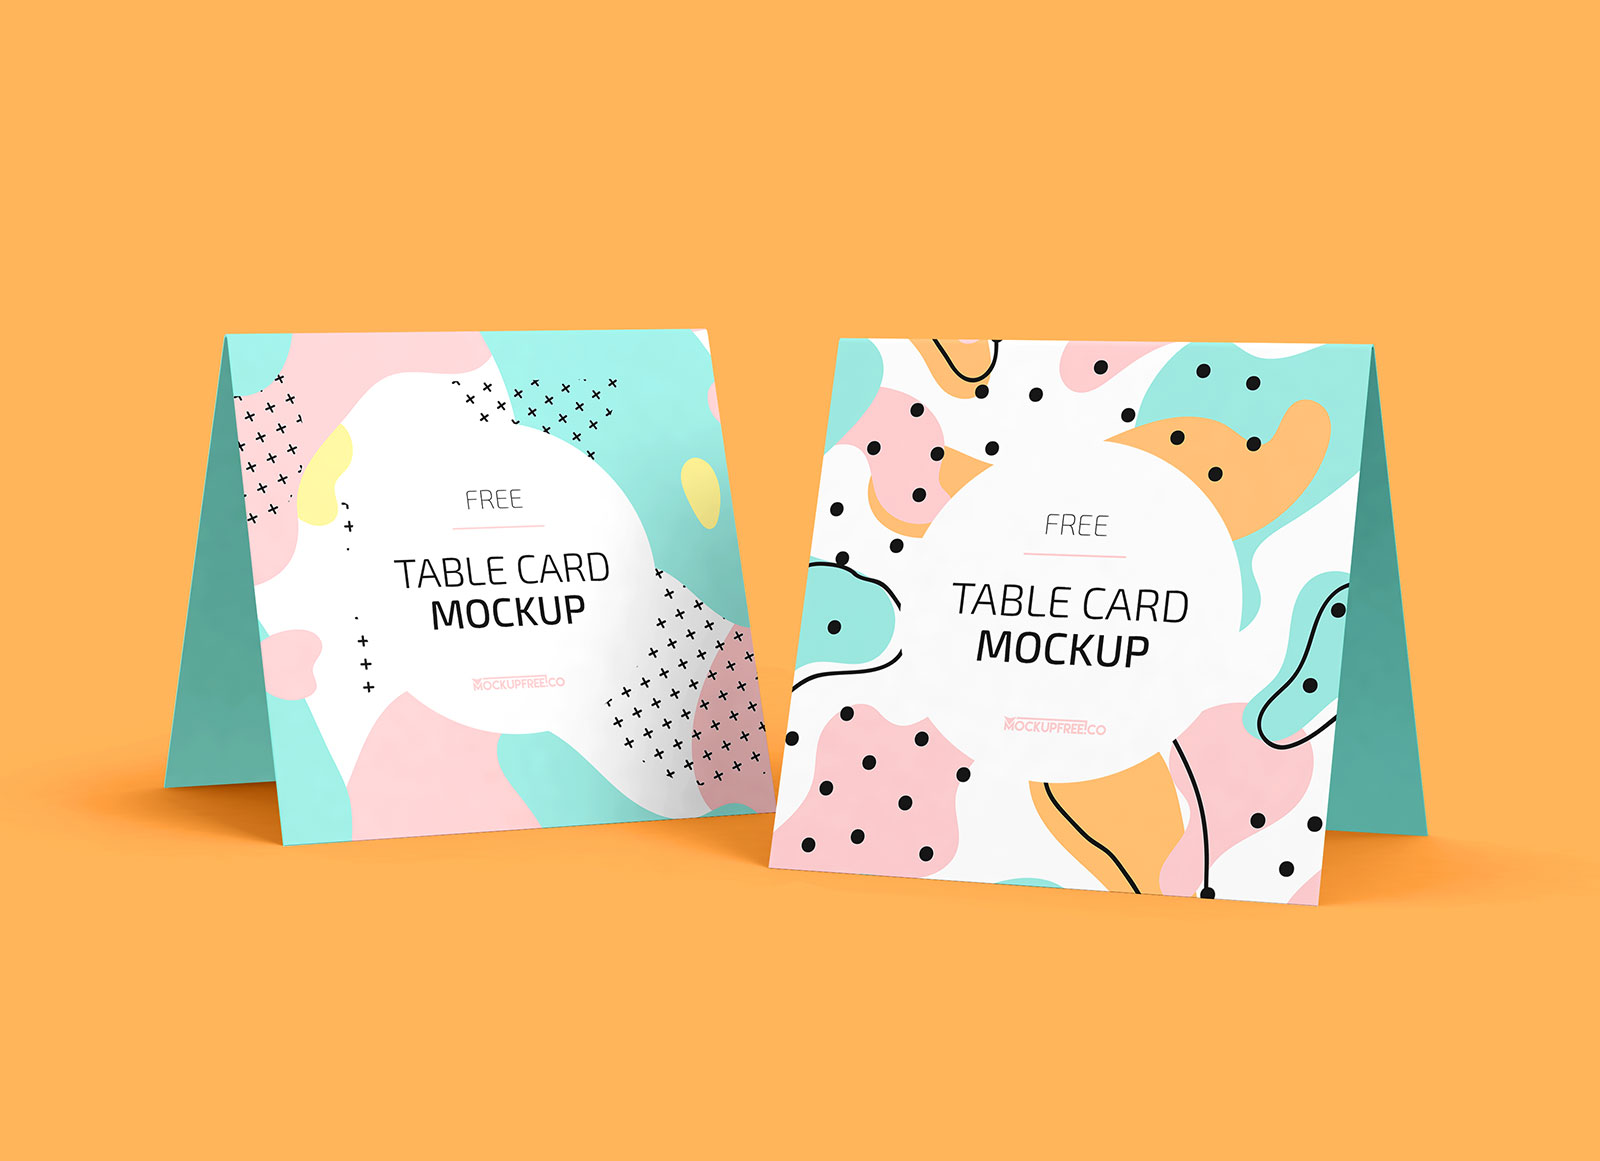 Free-Square-Greeting-Table-Card-Mockup-PSD-Set